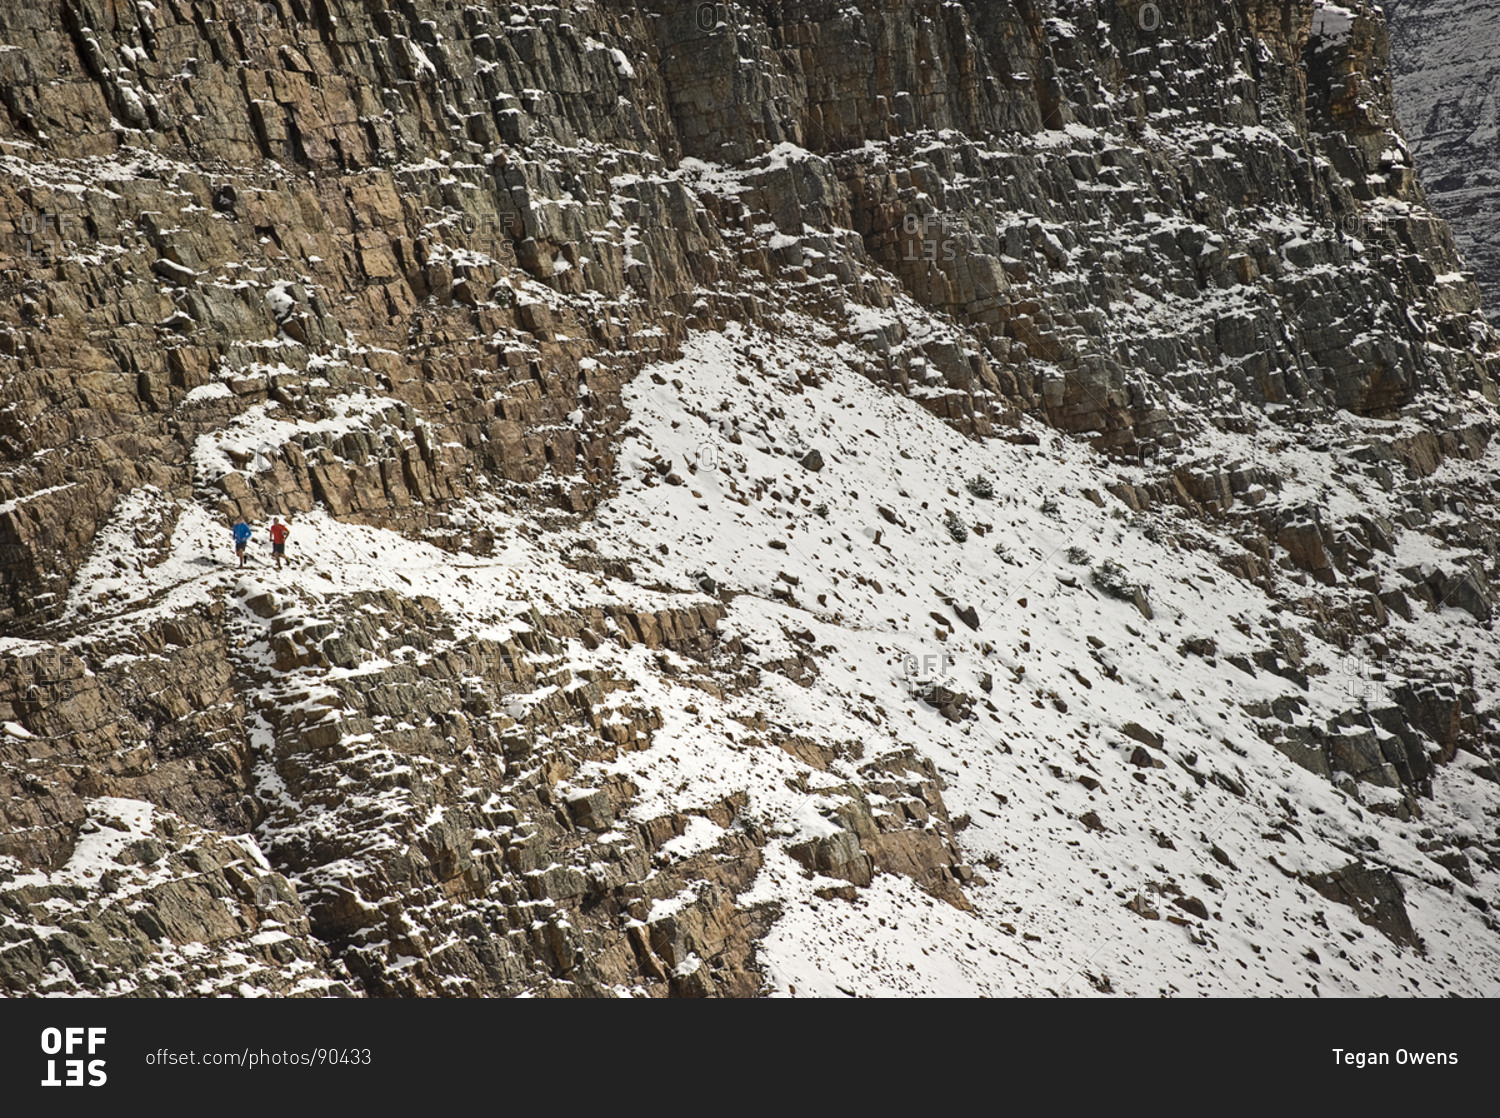 Two men run on a rocky, snowy mountain trail